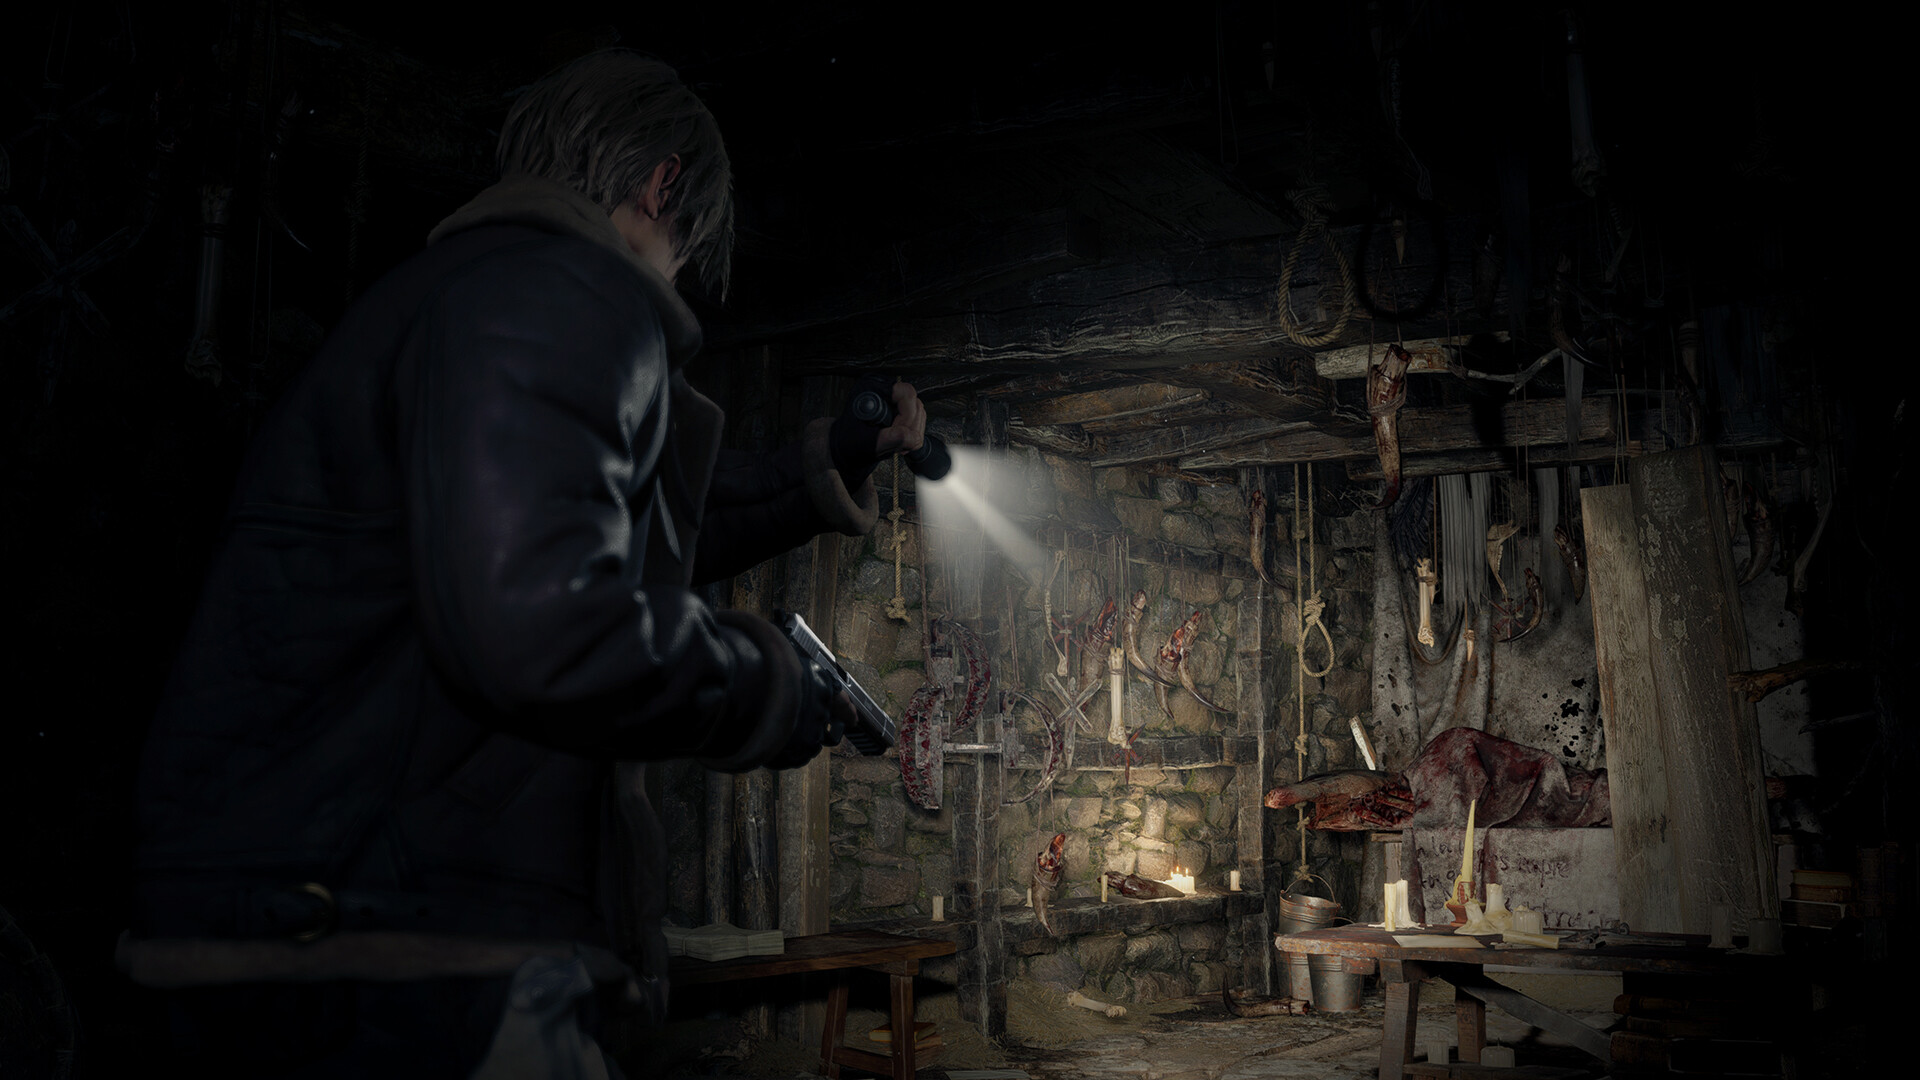 Resident Evil 4 (2023) Deluxe Edition NA Steam CD Key